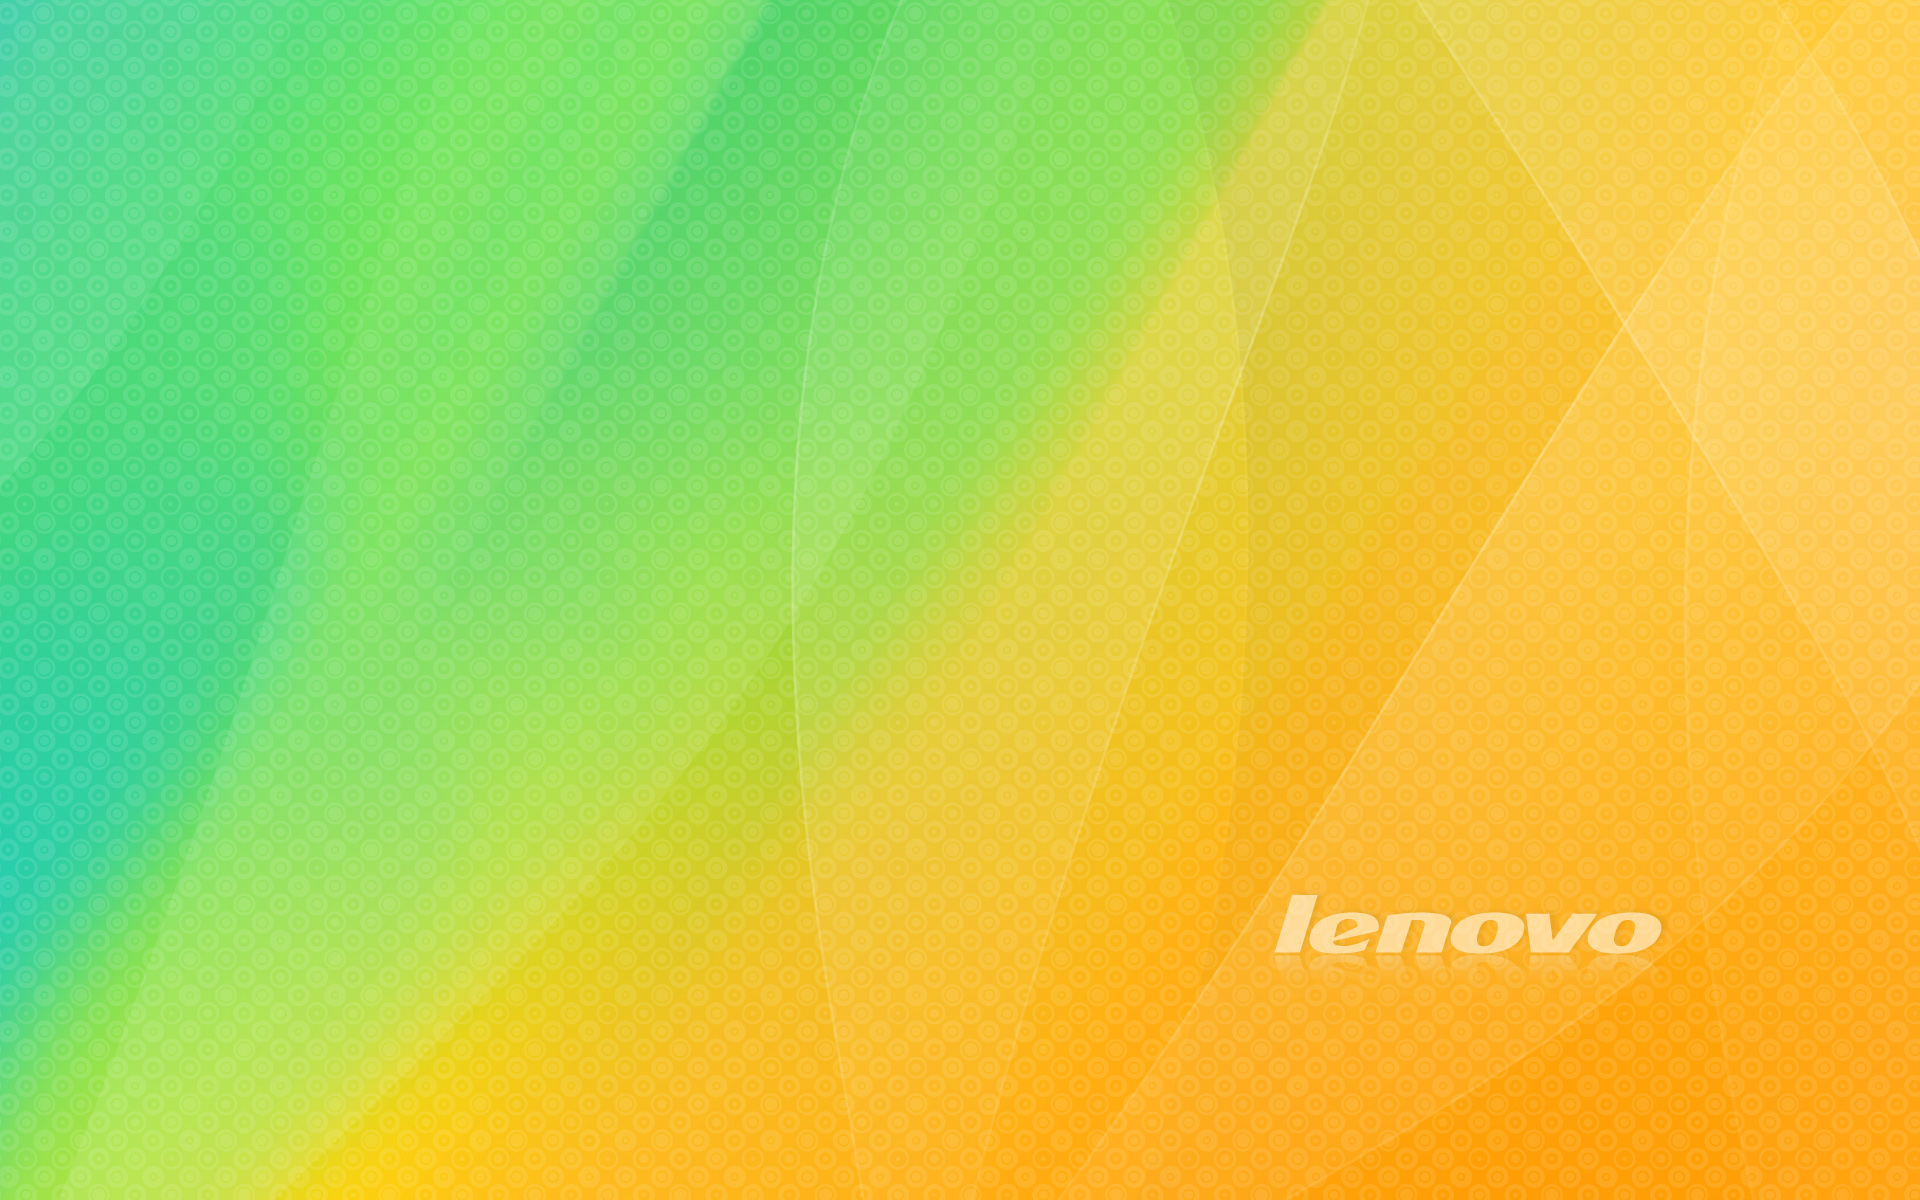 Lenovo Desktop Background Pic Apps Directories